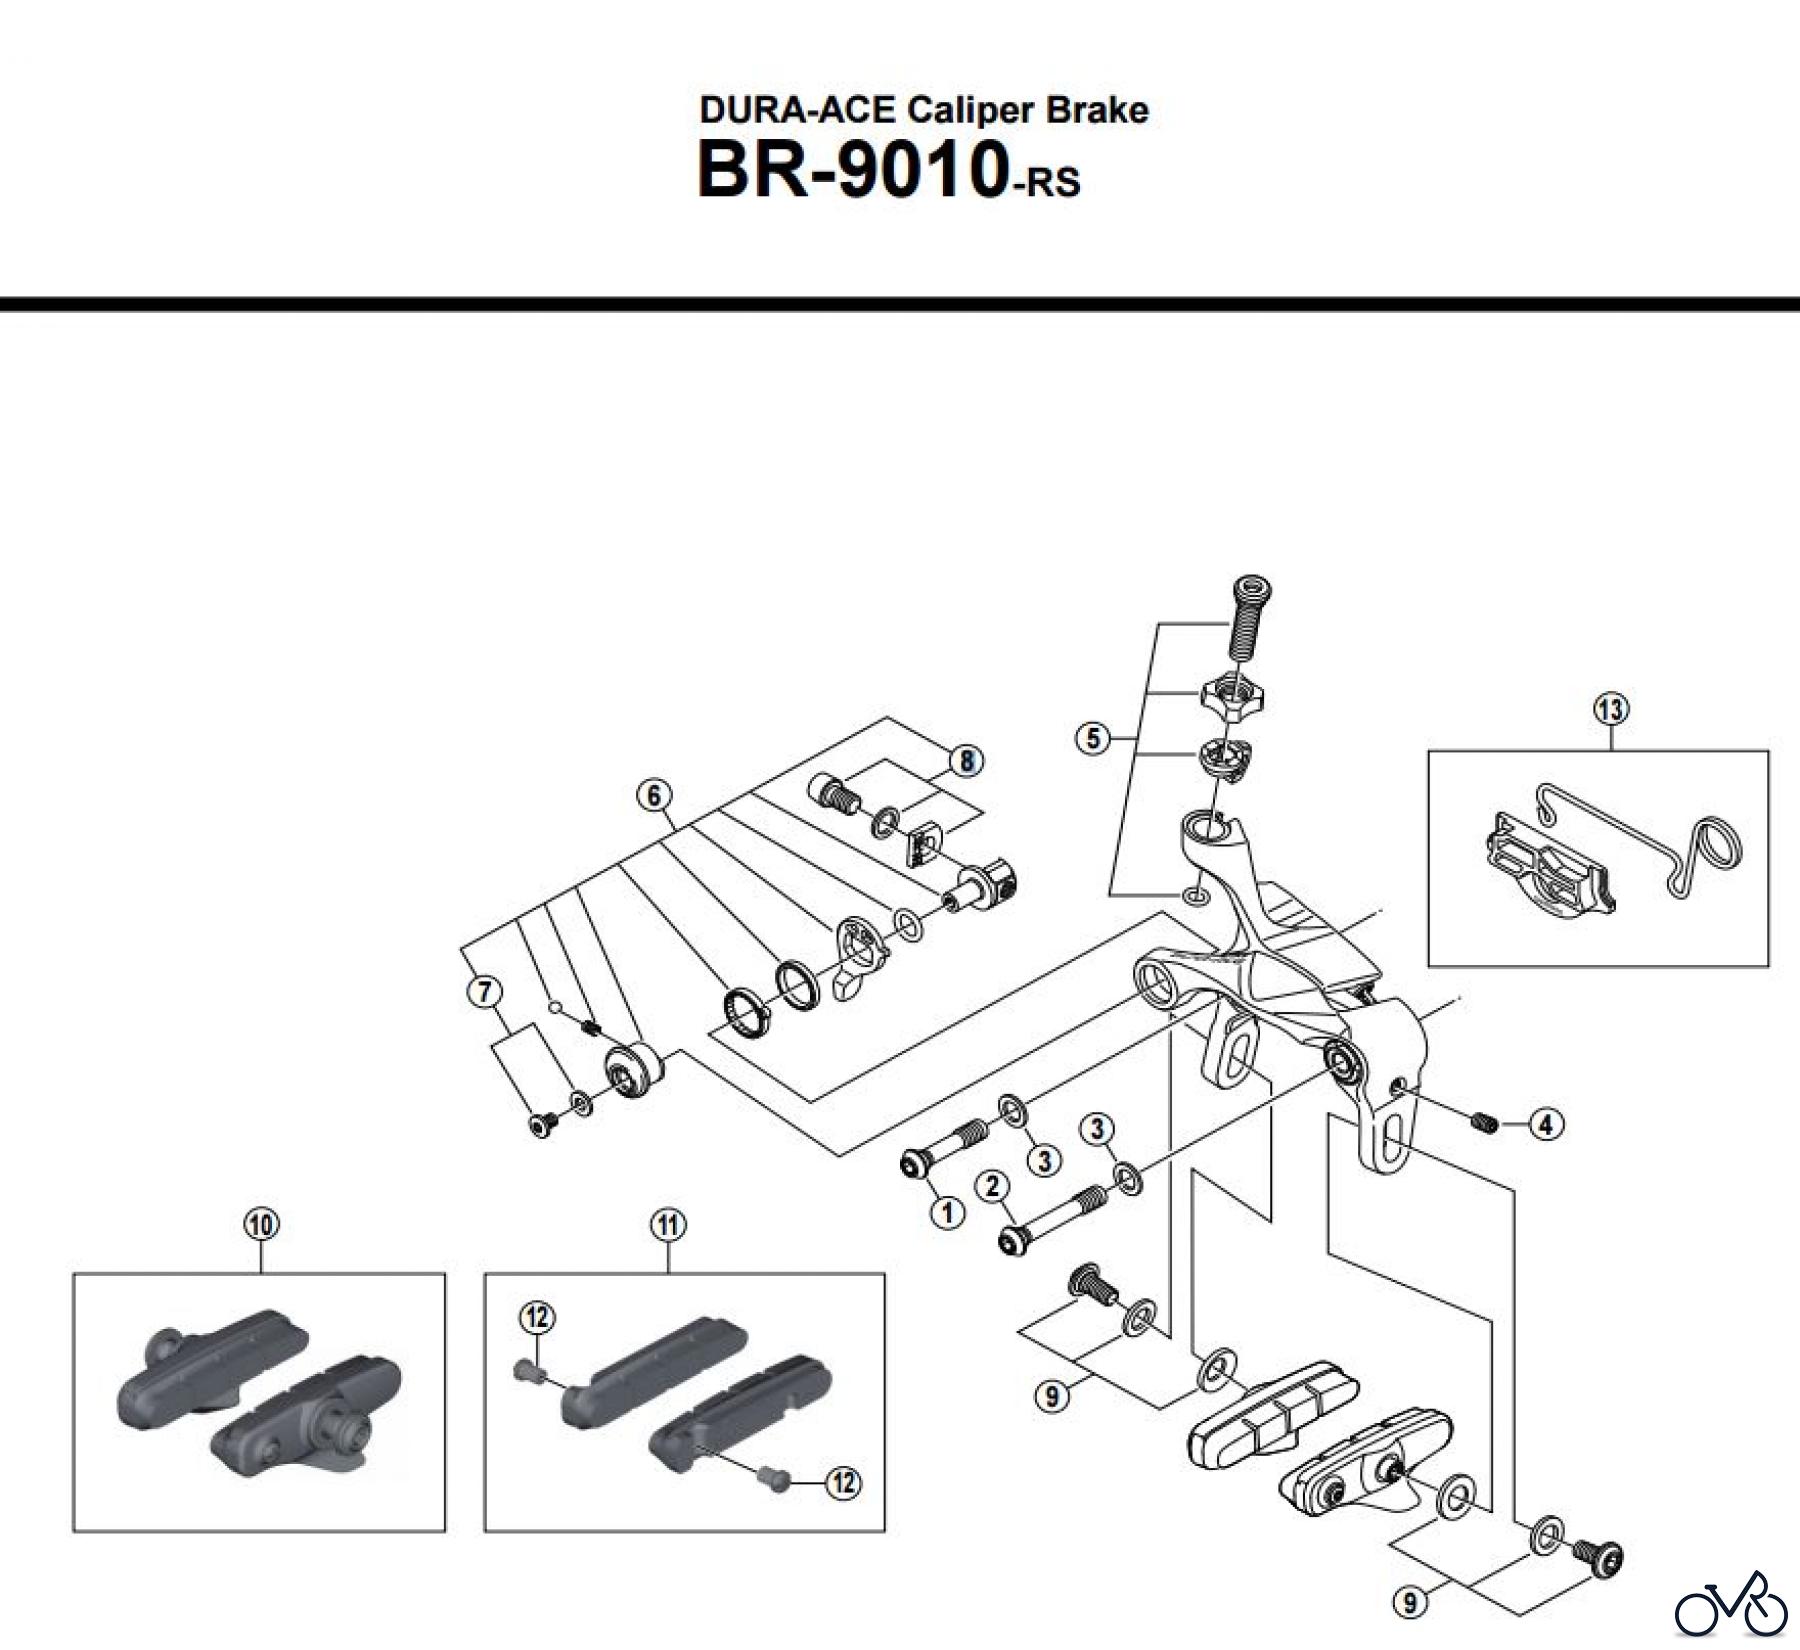  Shimano BR Brake - Bremse BR-9010RS -3740  DURA-ACE Caliper Brake